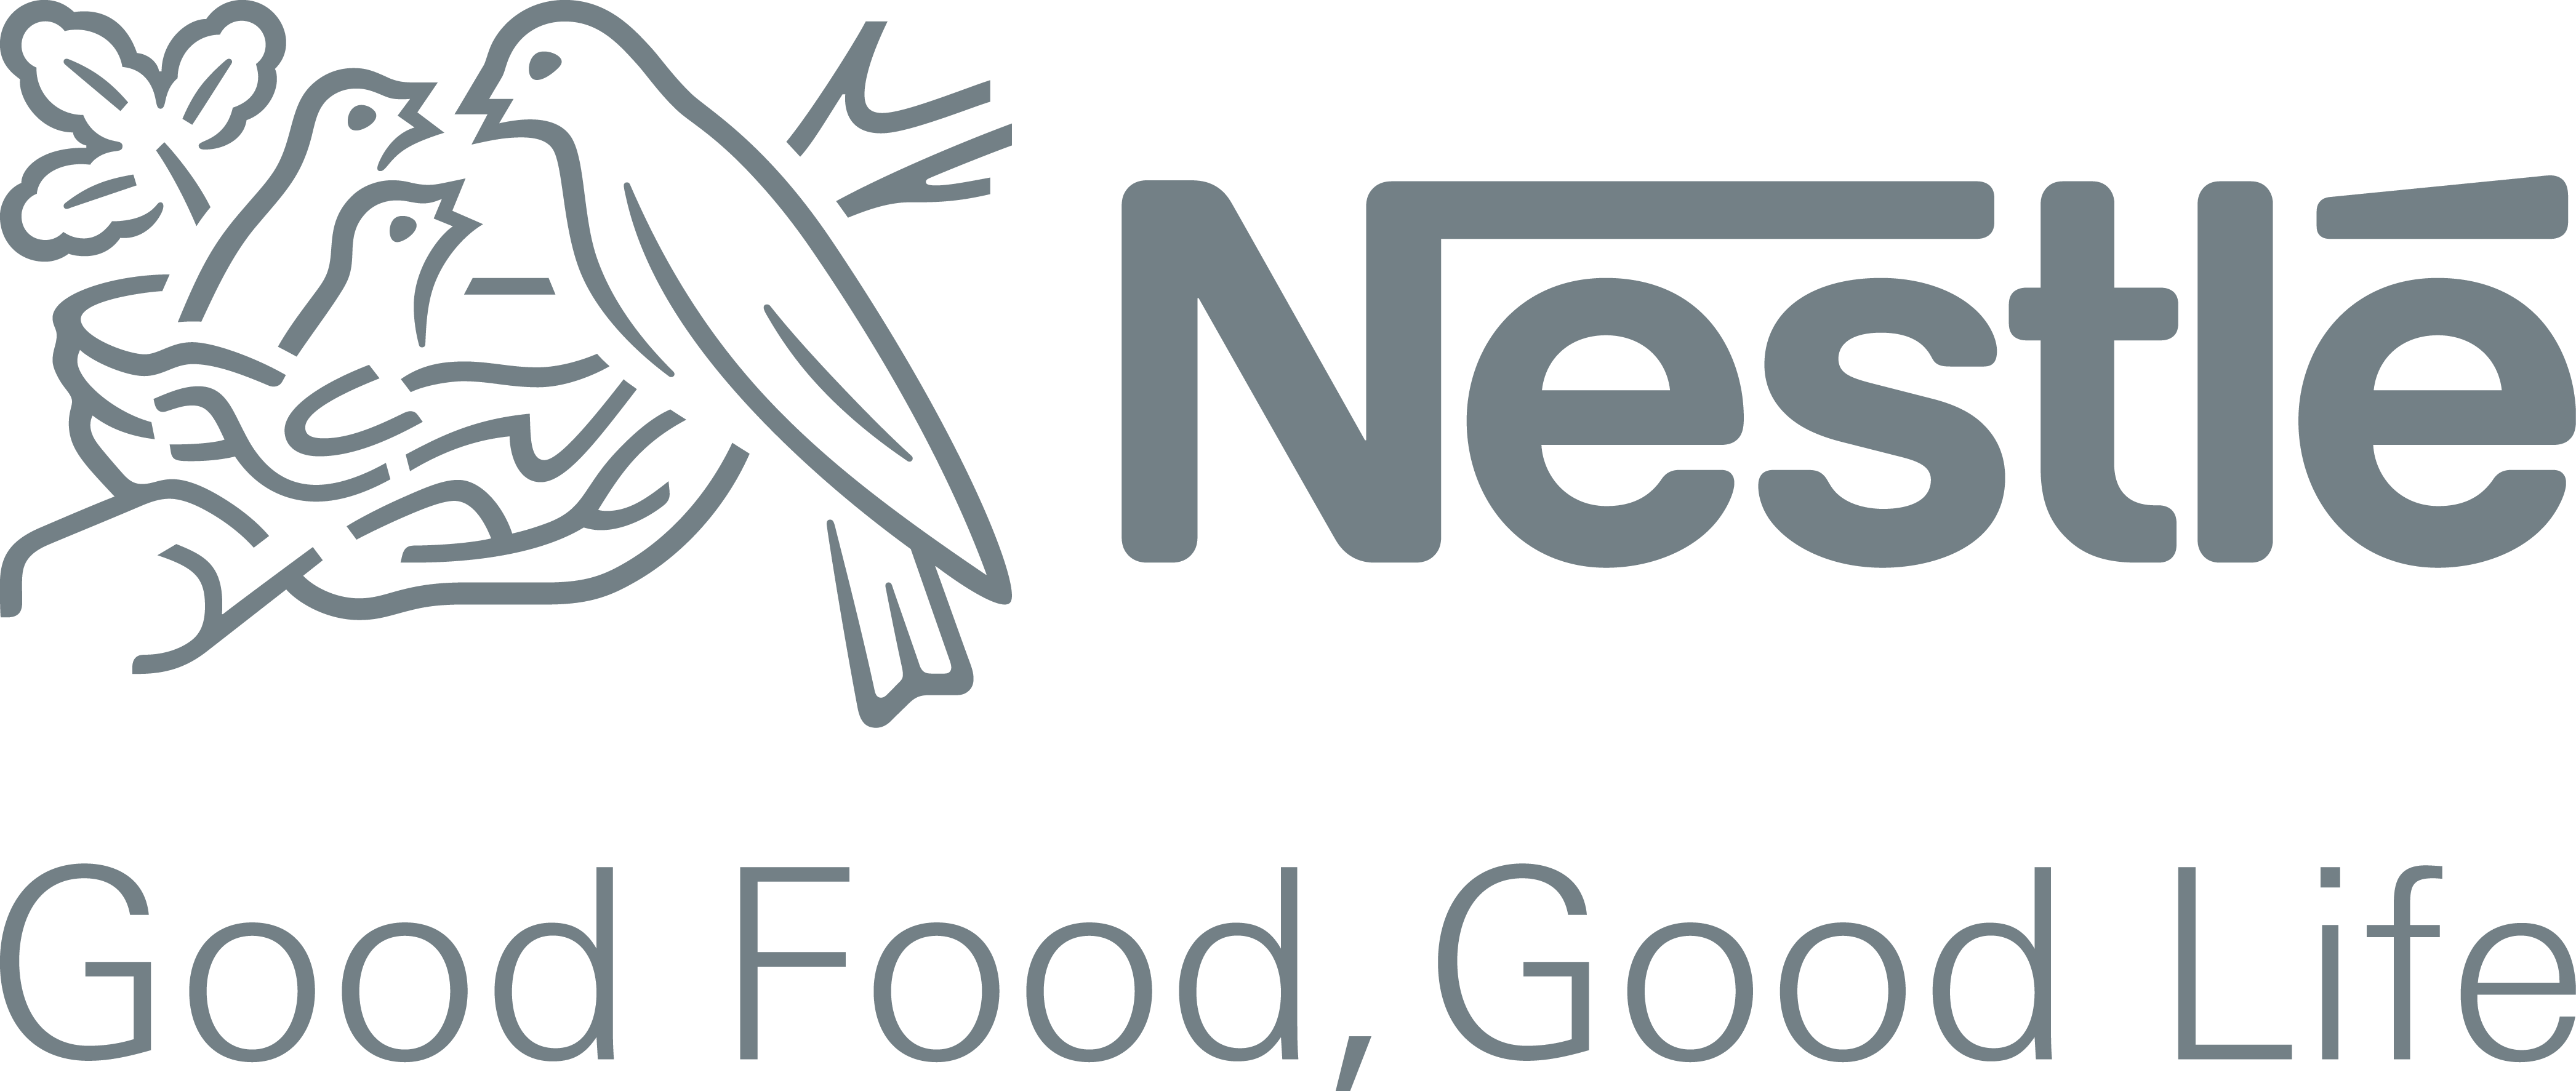 New Nestle Logo Transparent Image